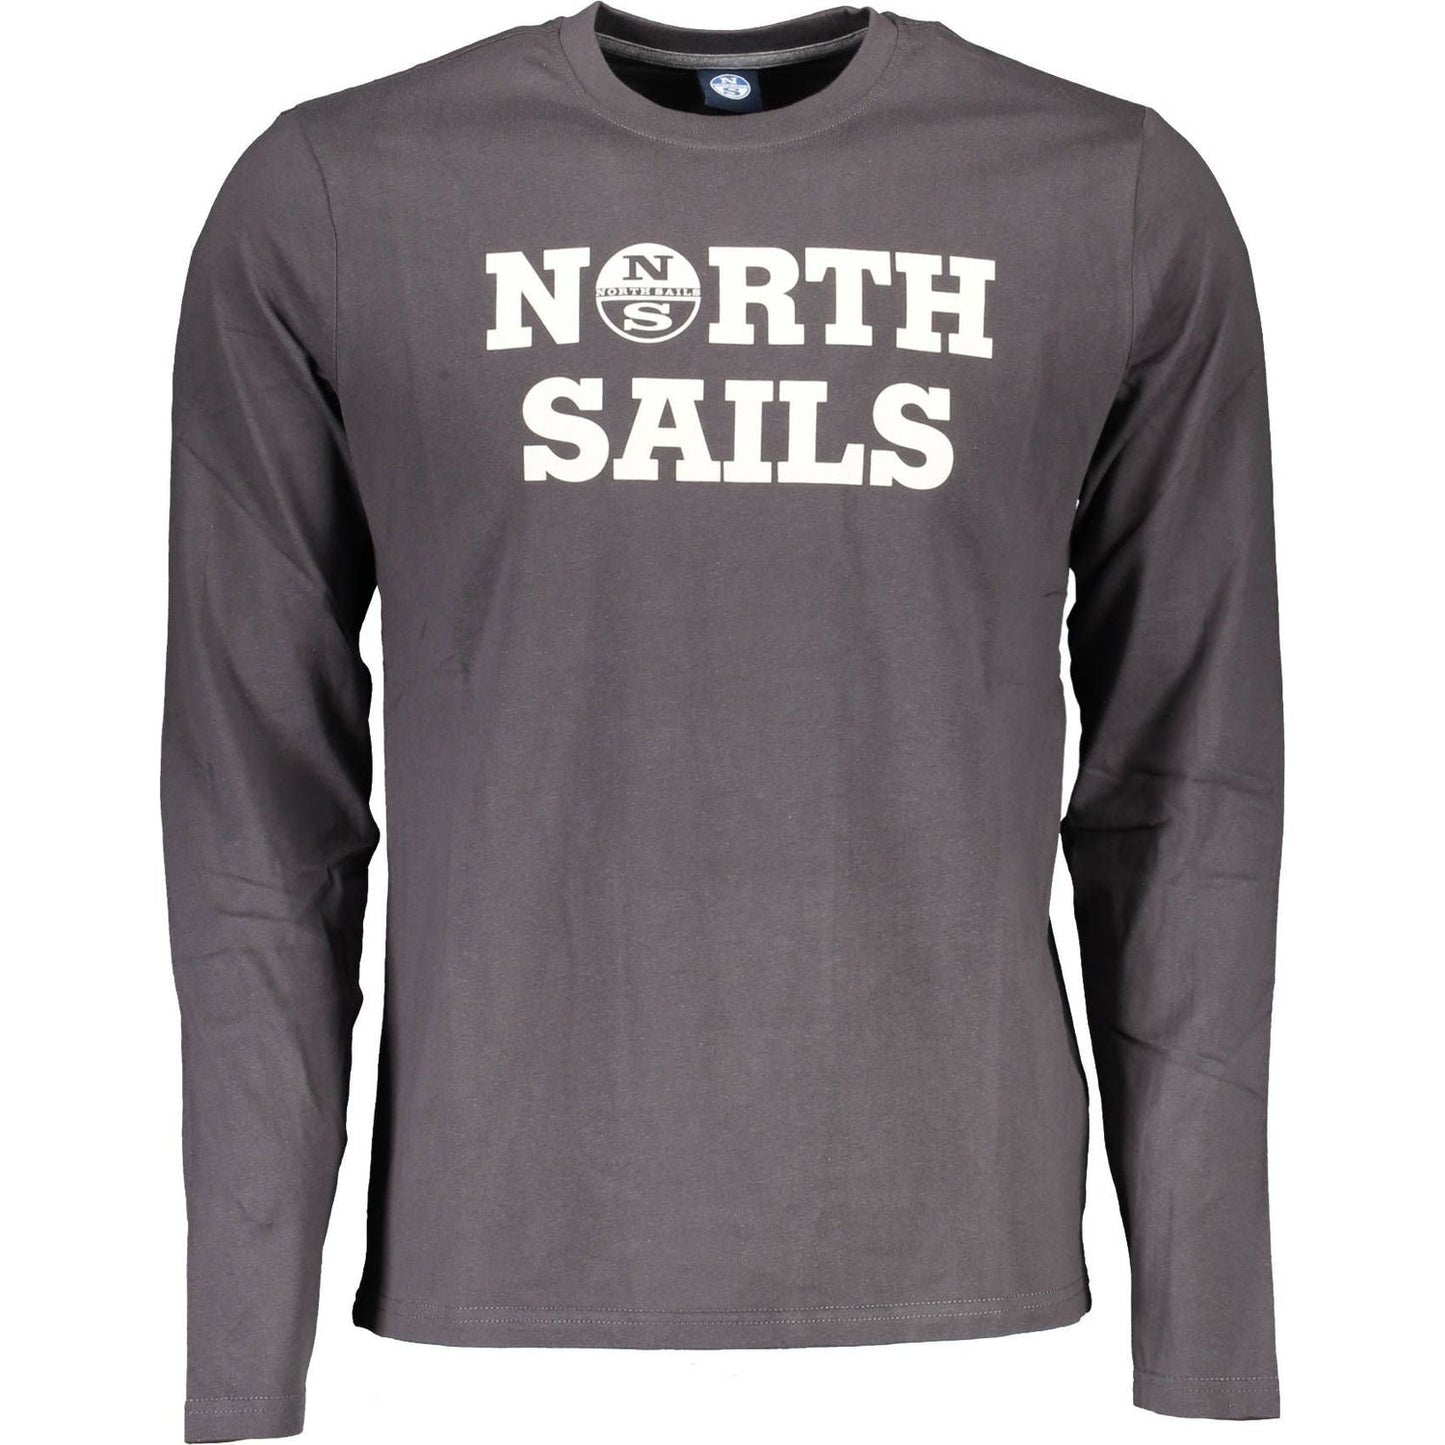 North Sails Elegant Gray Long-Sleeve Cotton Tee elegant-gray-long-sleeve-cotton-tee